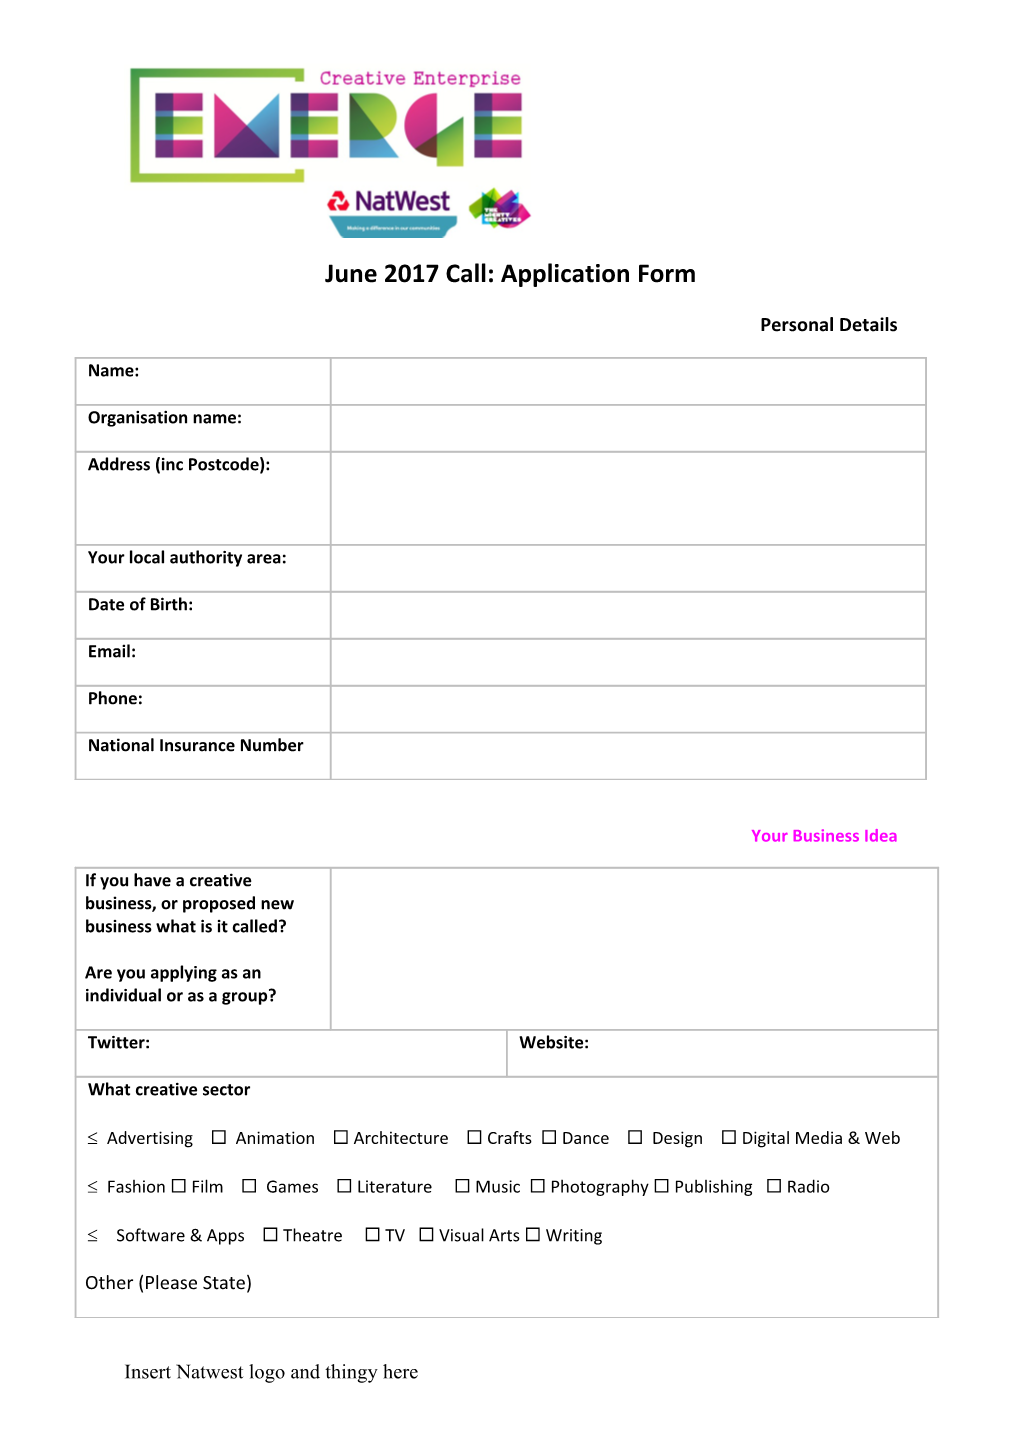 June 2017 Call: Application Form